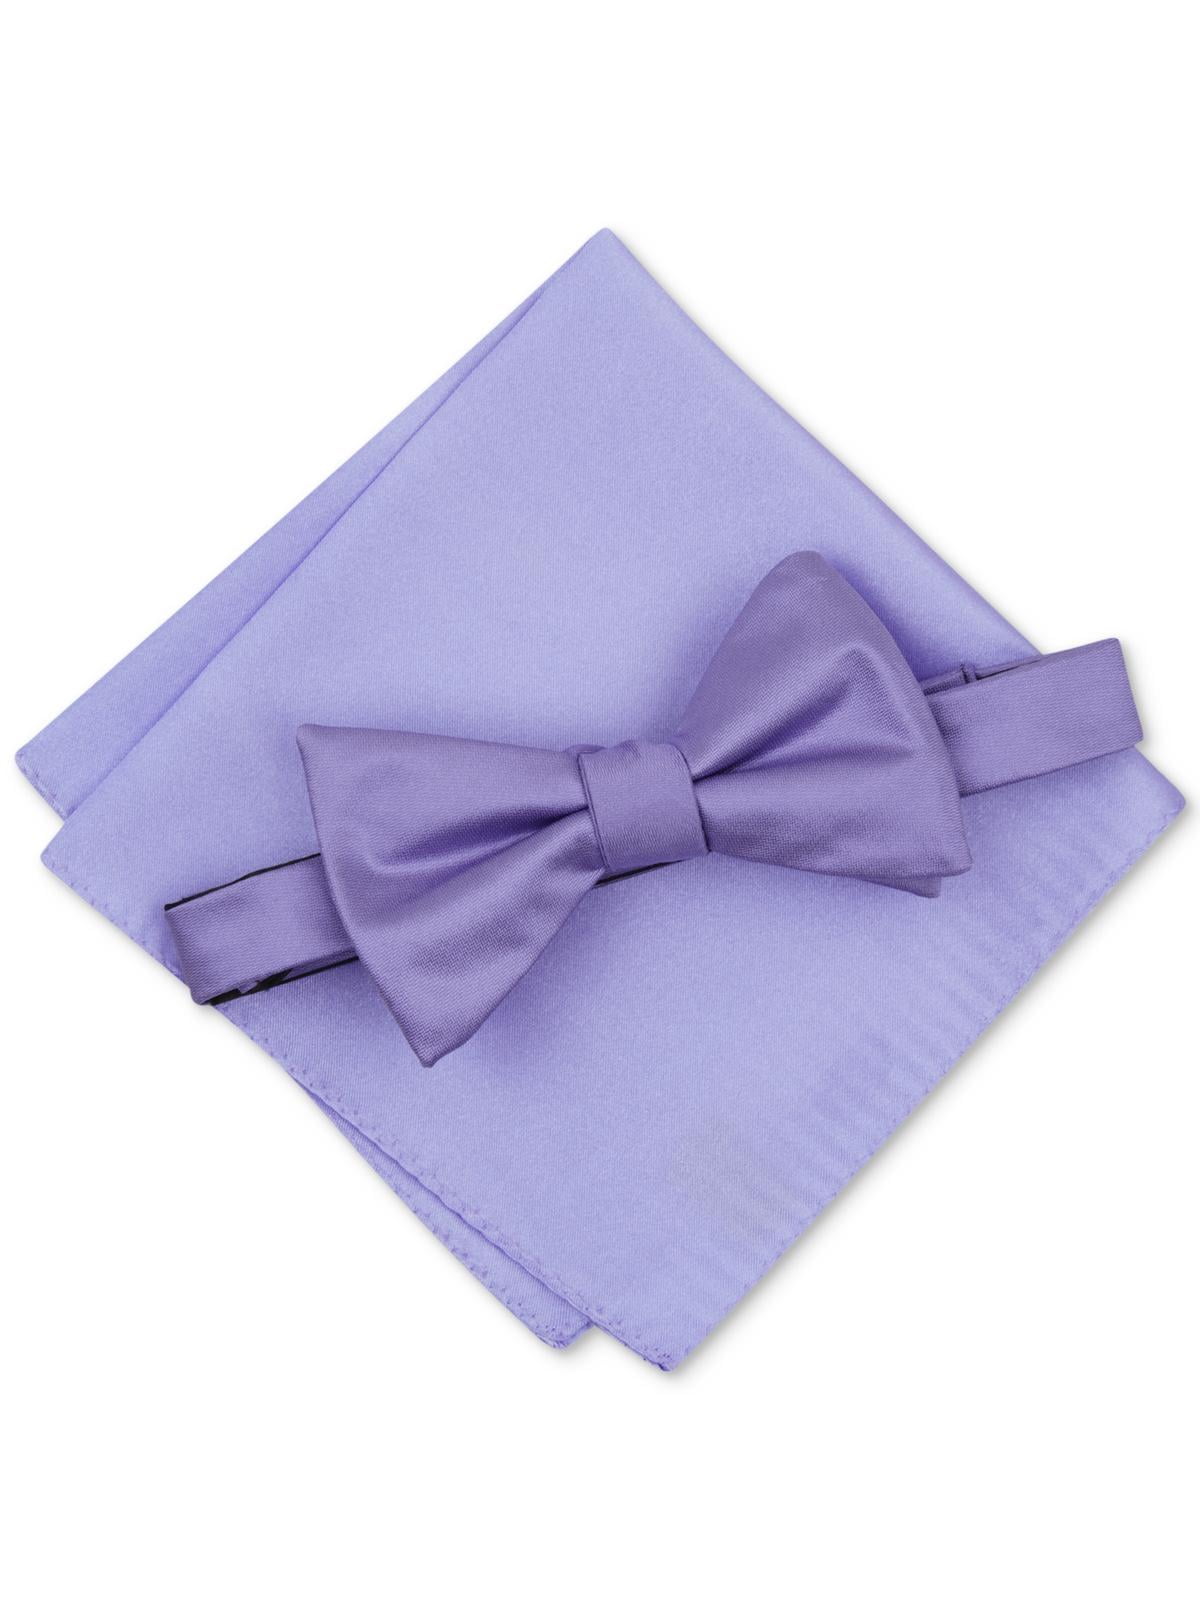 New in box Brand Q Men's Self-tied Bow Tie & Hankie Polka dots purple Black 